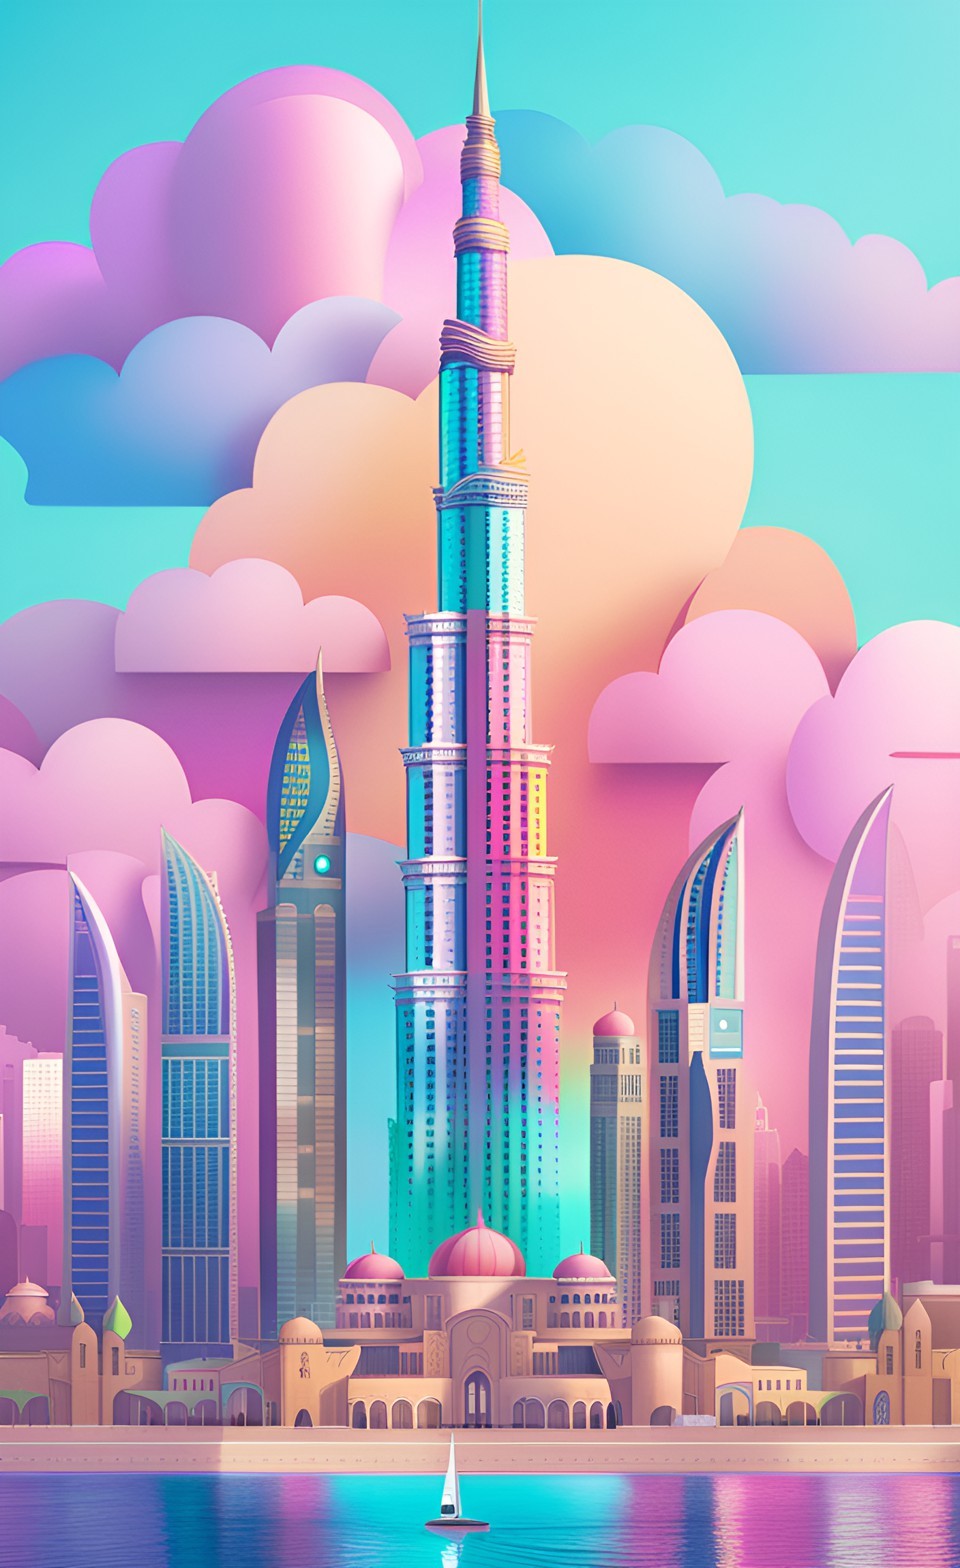 Dubai Burj Khalifa Tower iPhone Wallpaper 4K